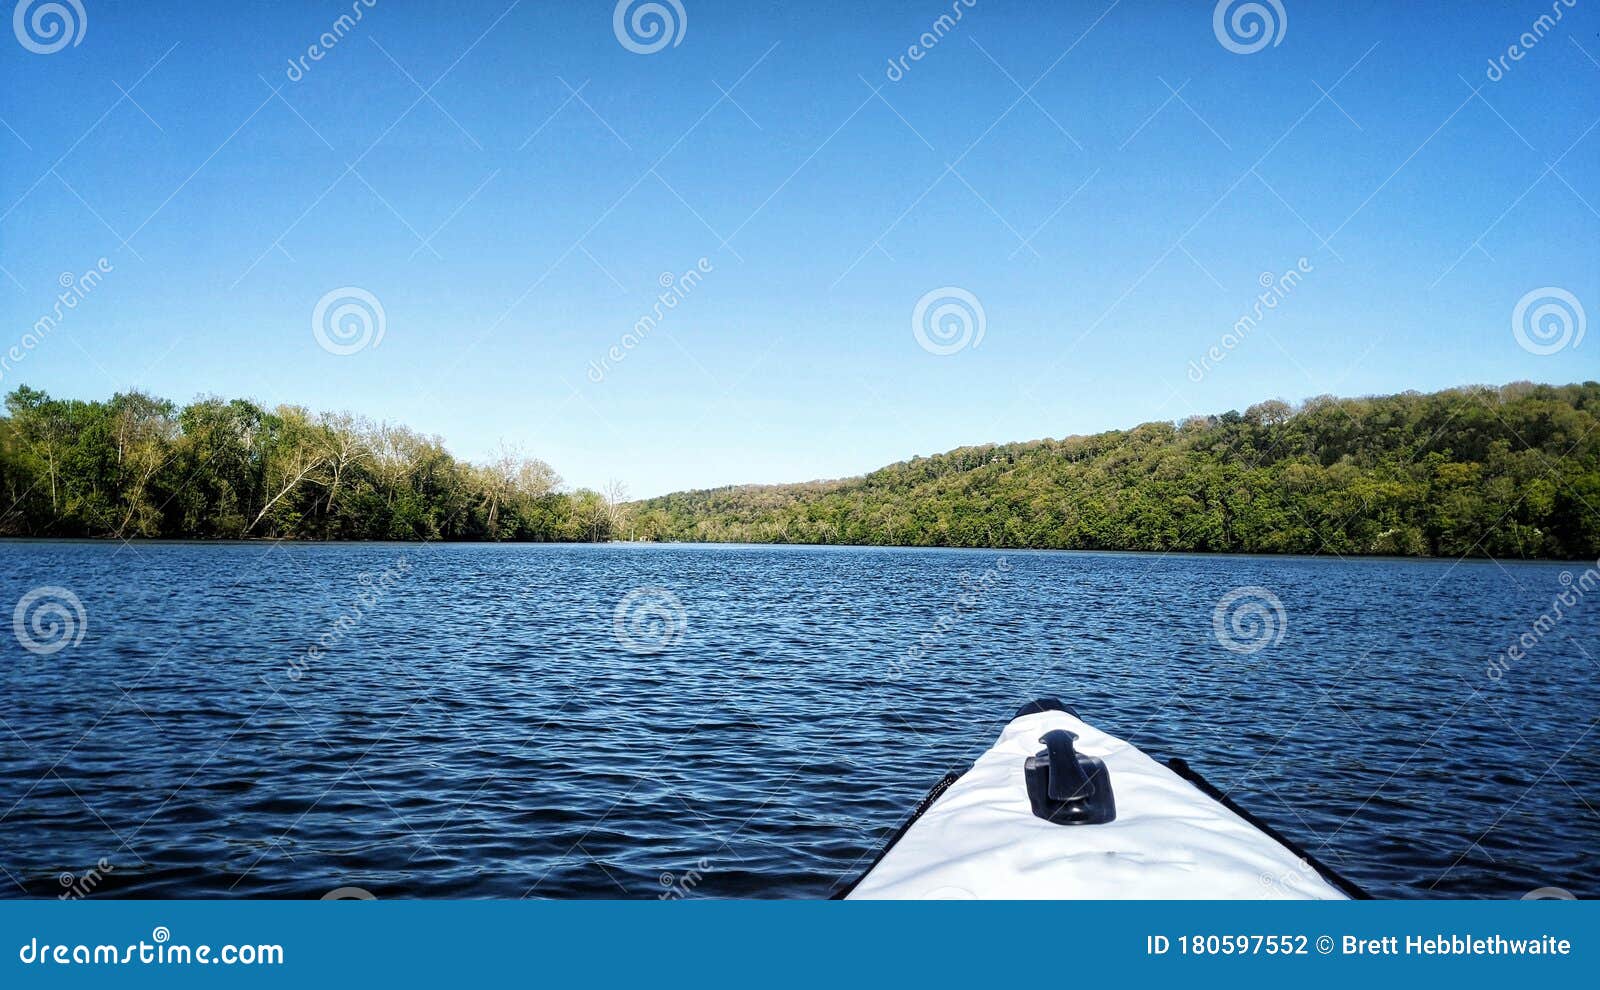 lake taneycomo on a kayak. blue skies and blue water.